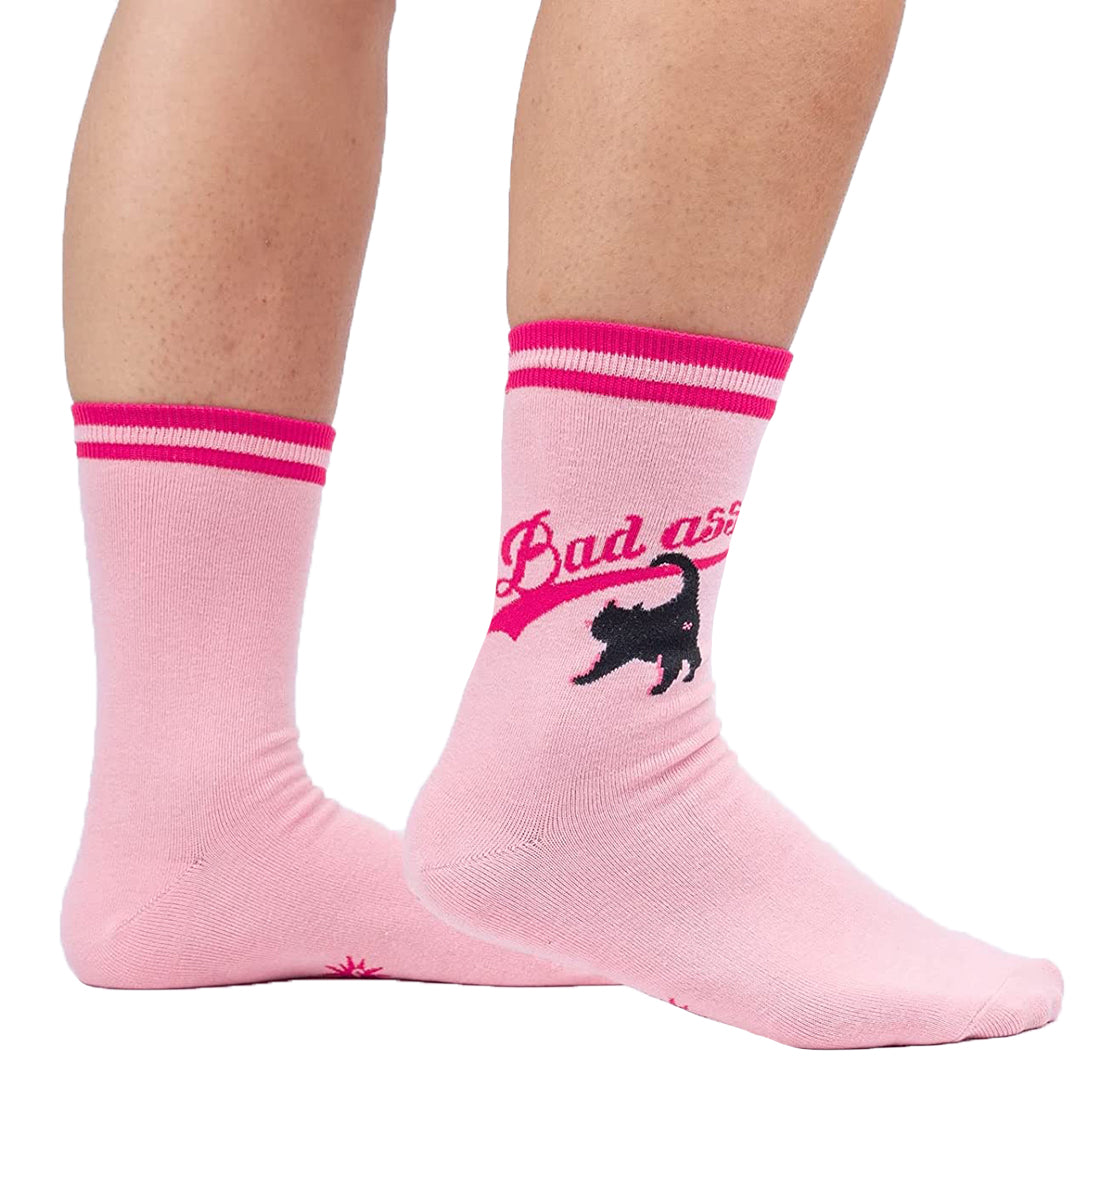 SOCK it to me Women's Crew Socks (W0410),Bad Ass Cat - Bad Ass Cat,One Size